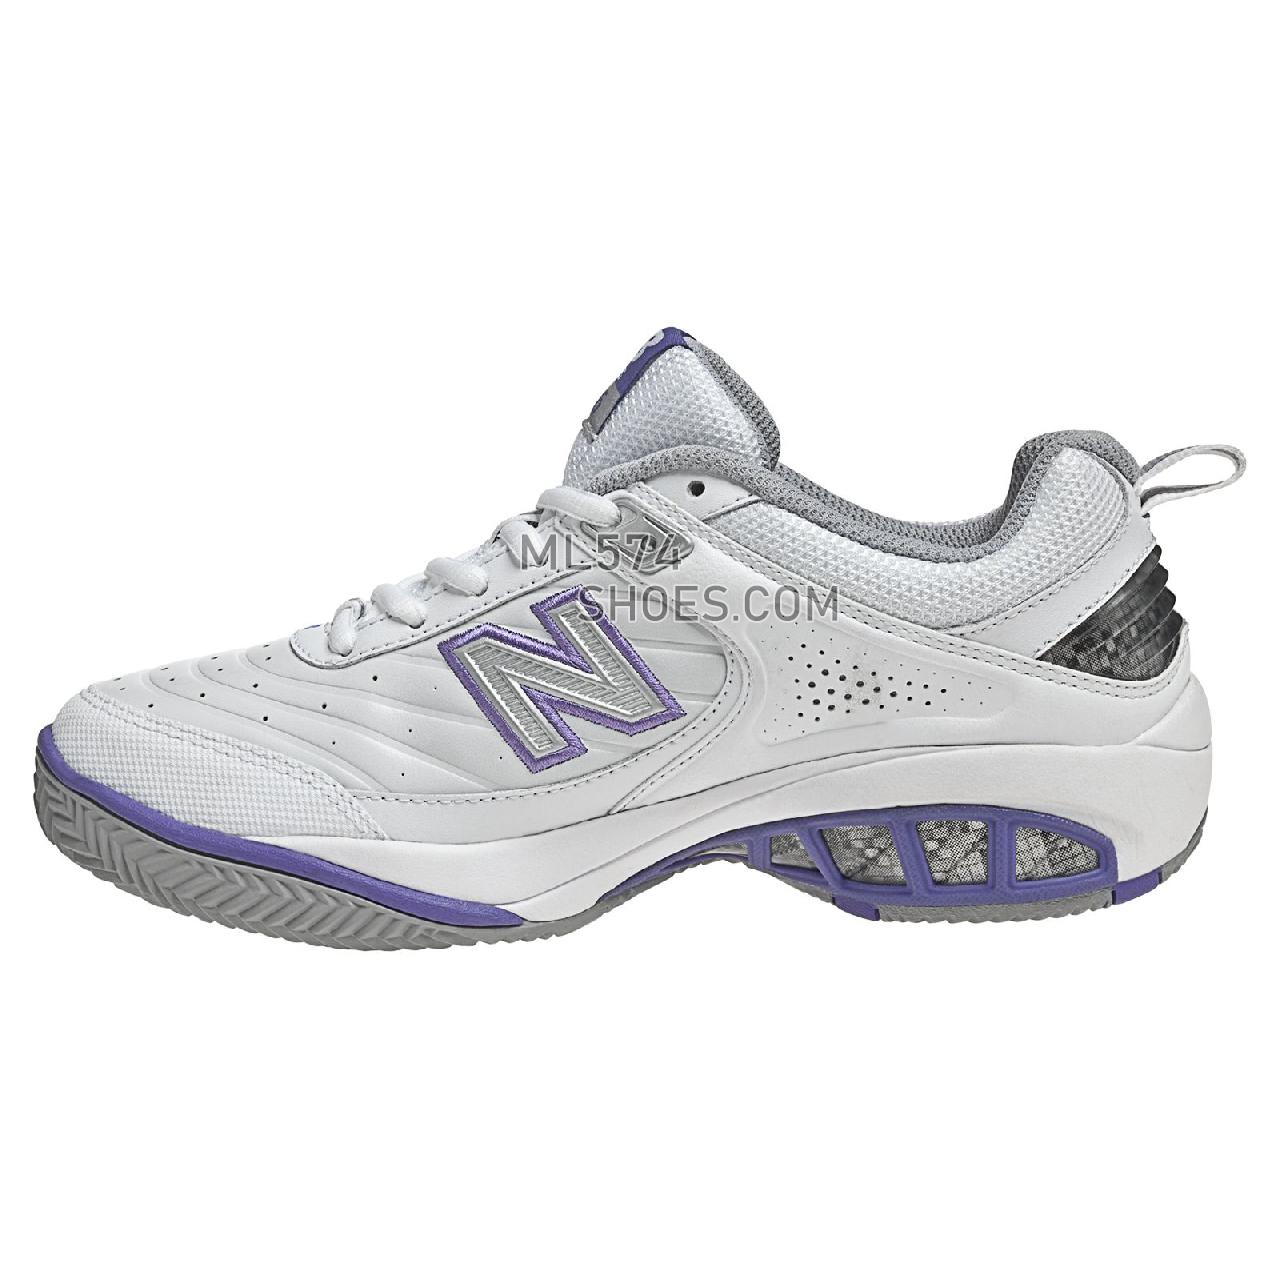 New Balance 806 - Women's 806 - Tennis / Court White - WC806W